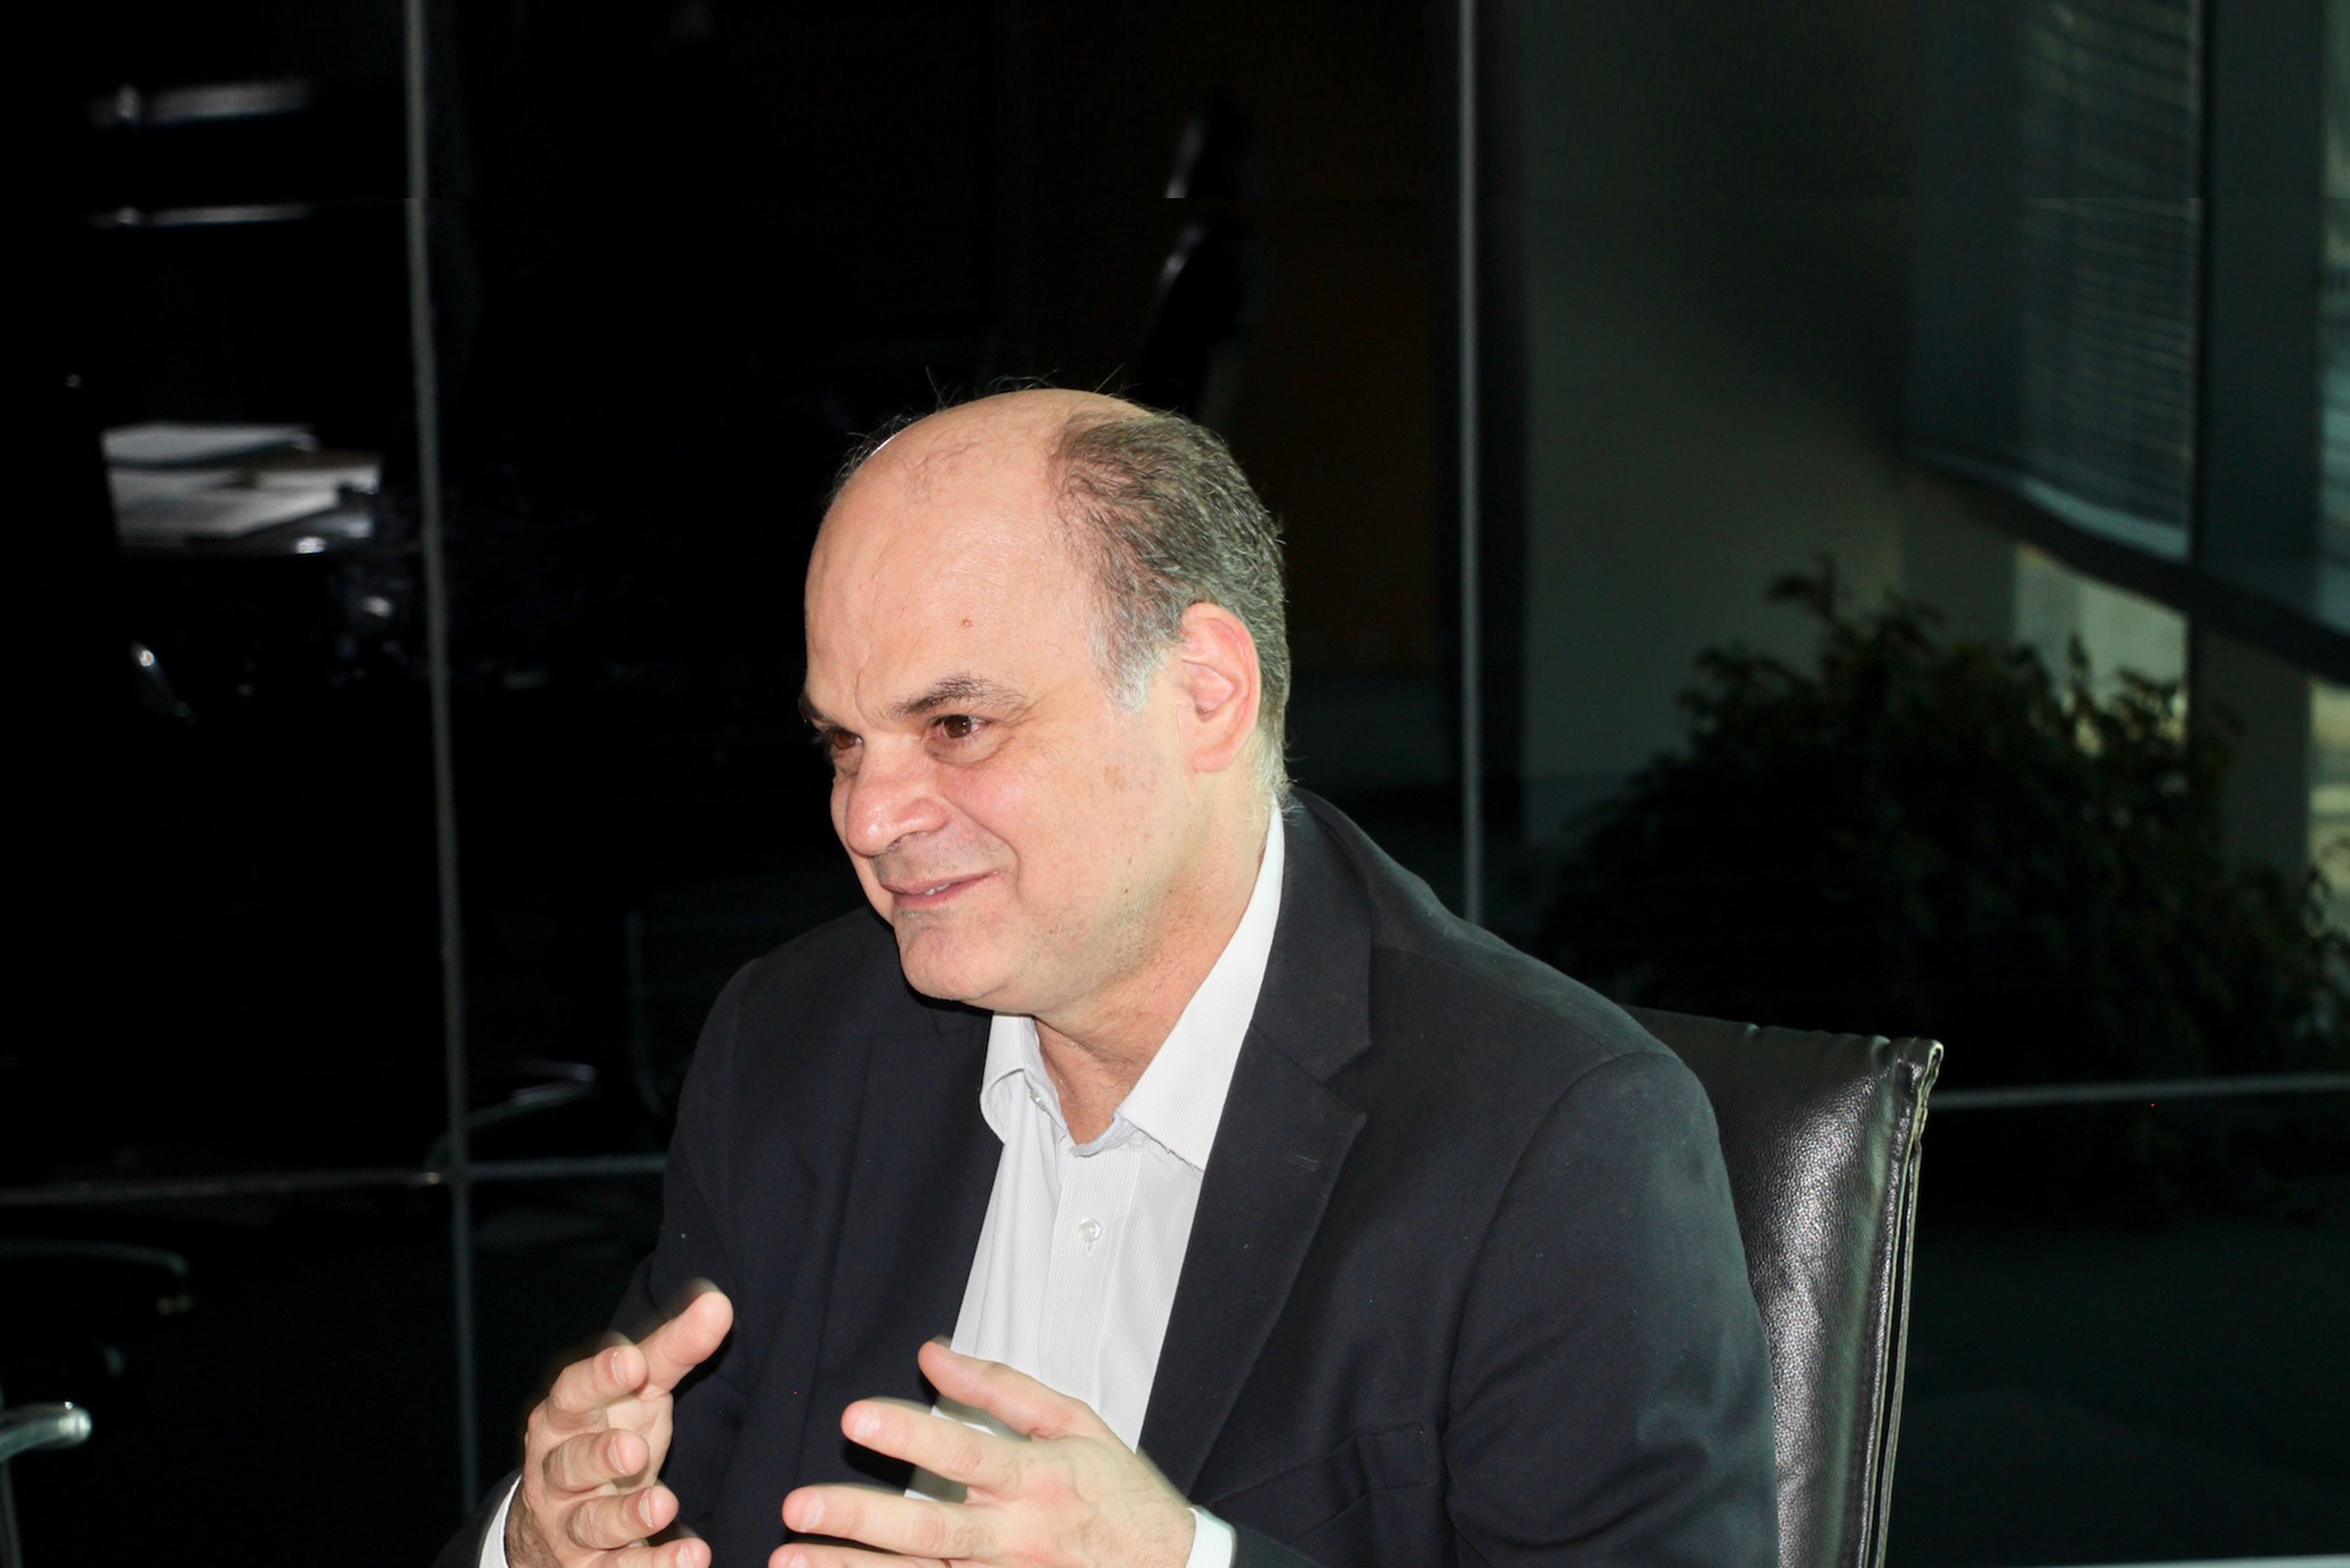 Ing. Horacio Andrés Tolosa, President of ANTEL, Uruguay